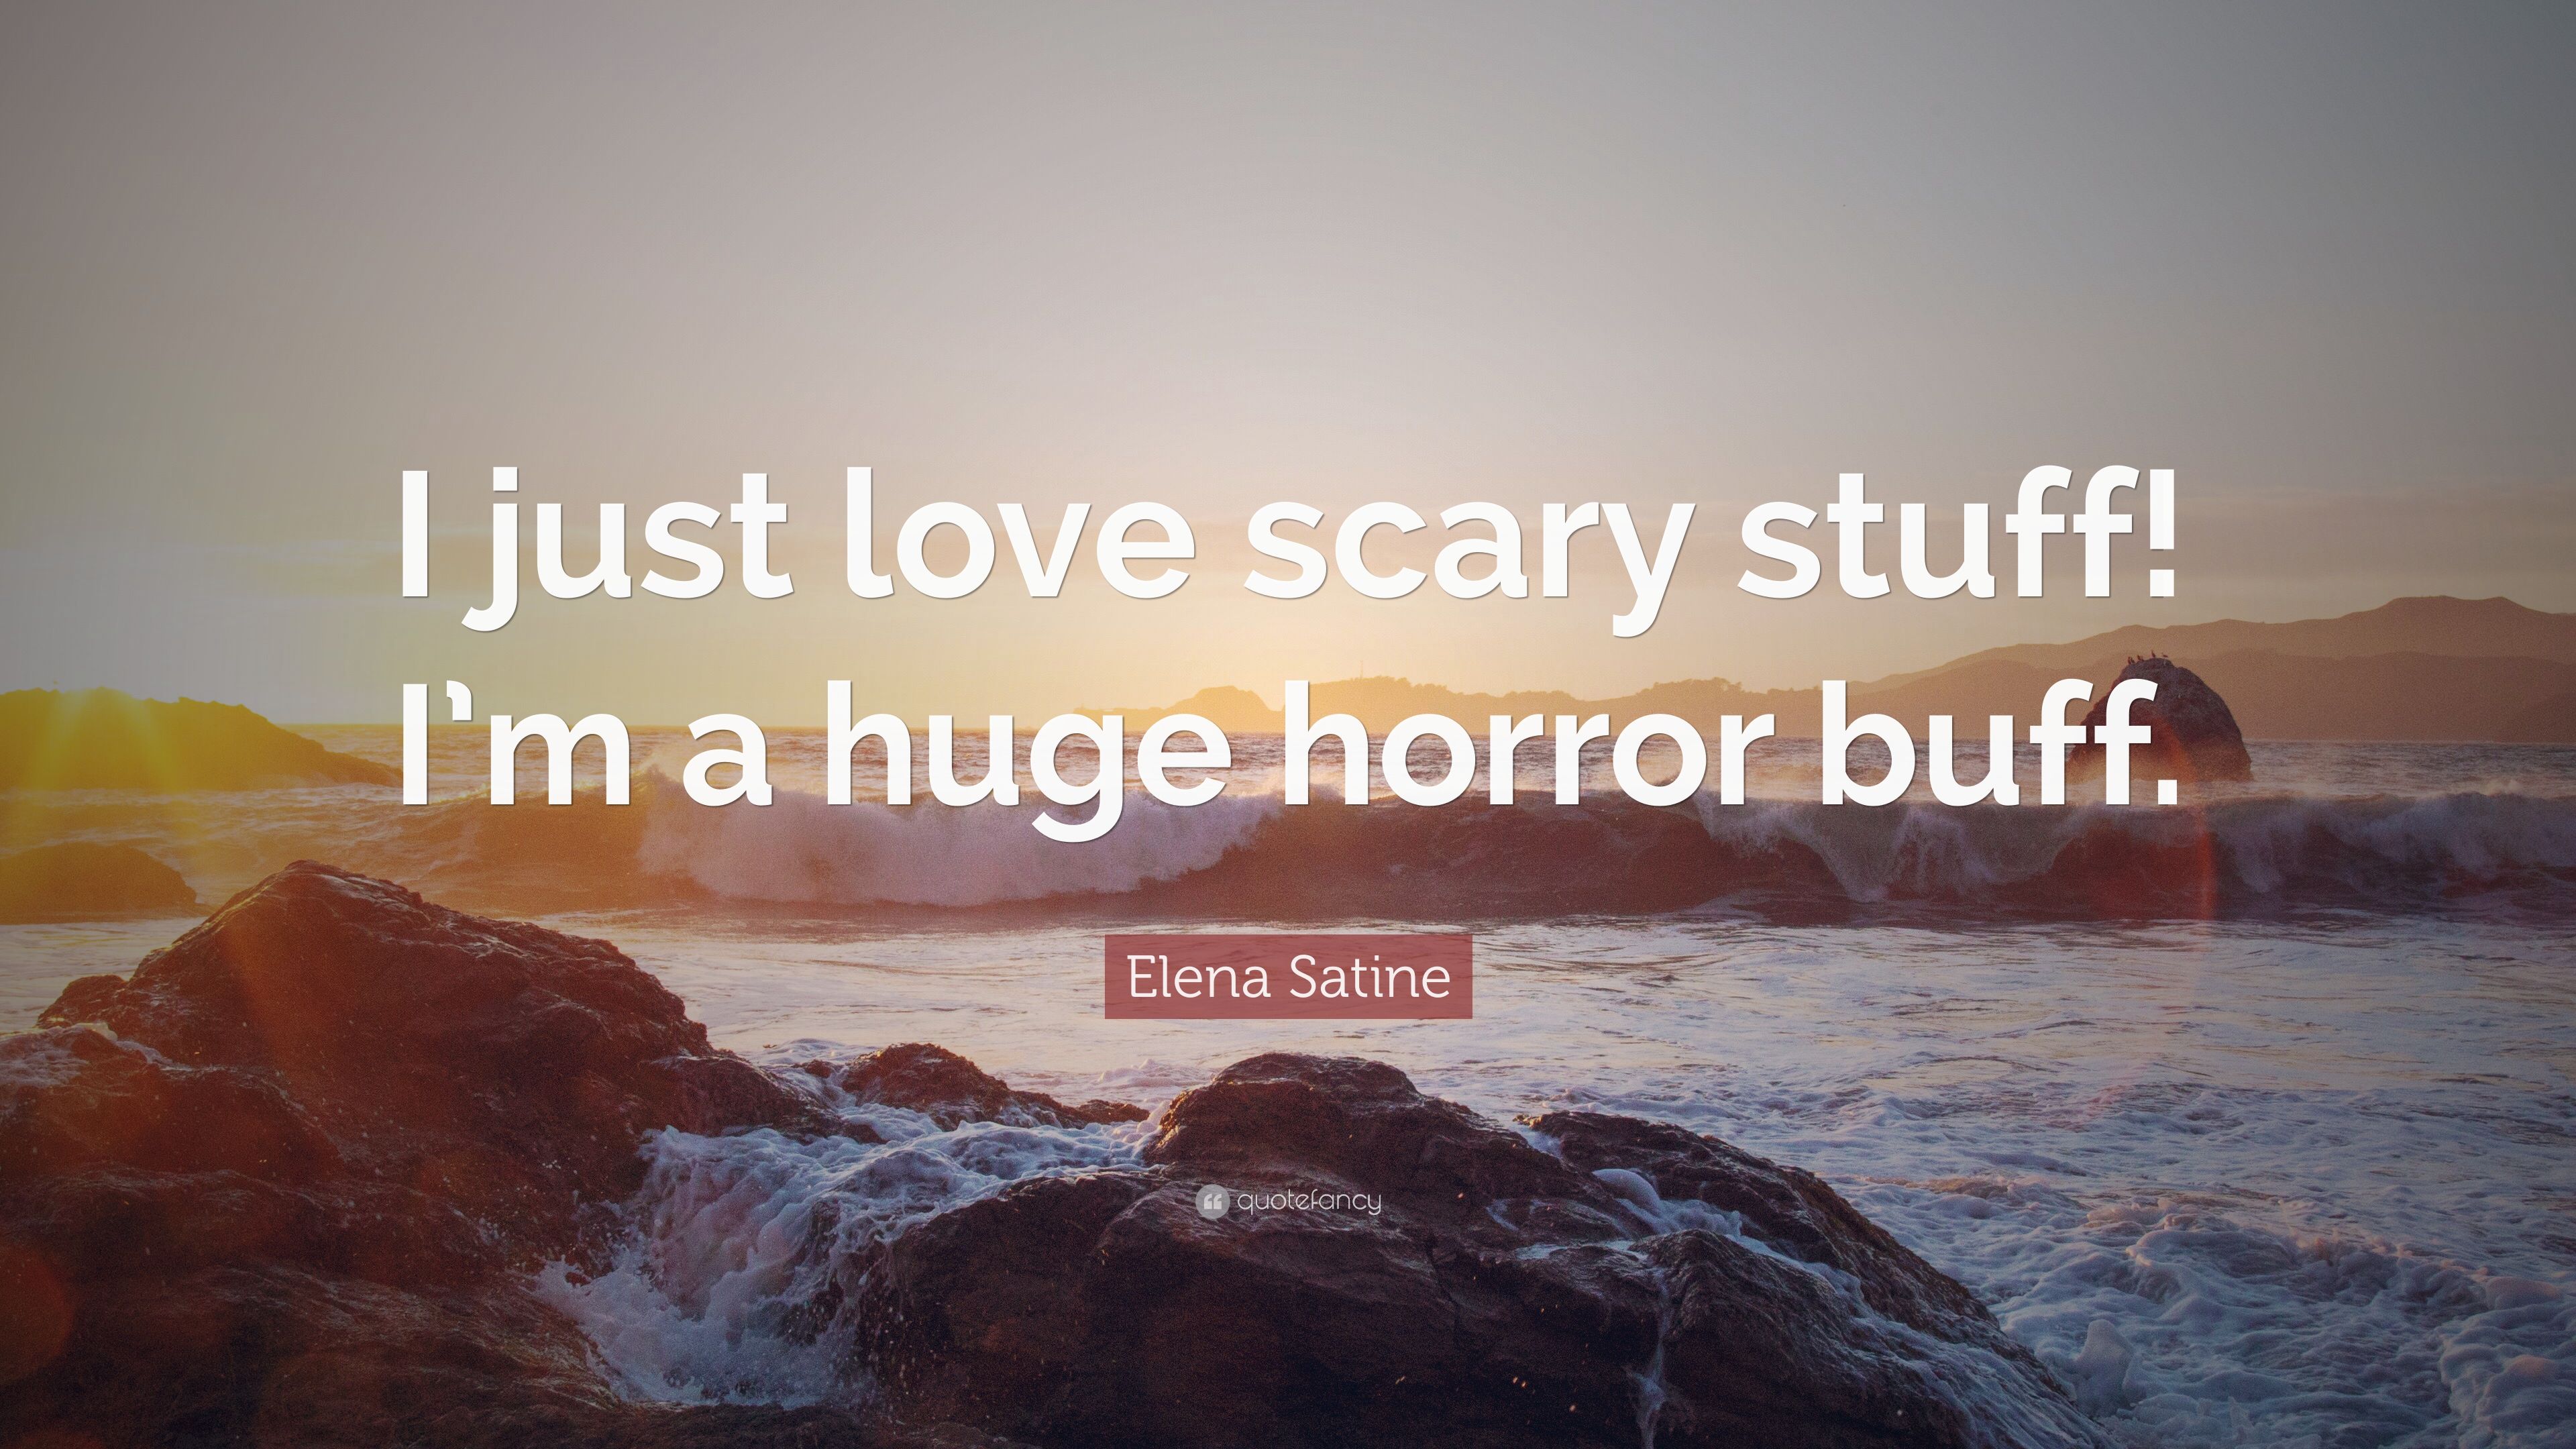 Elena Satine Quote: “I just love scary stuff! I'm a huge horror